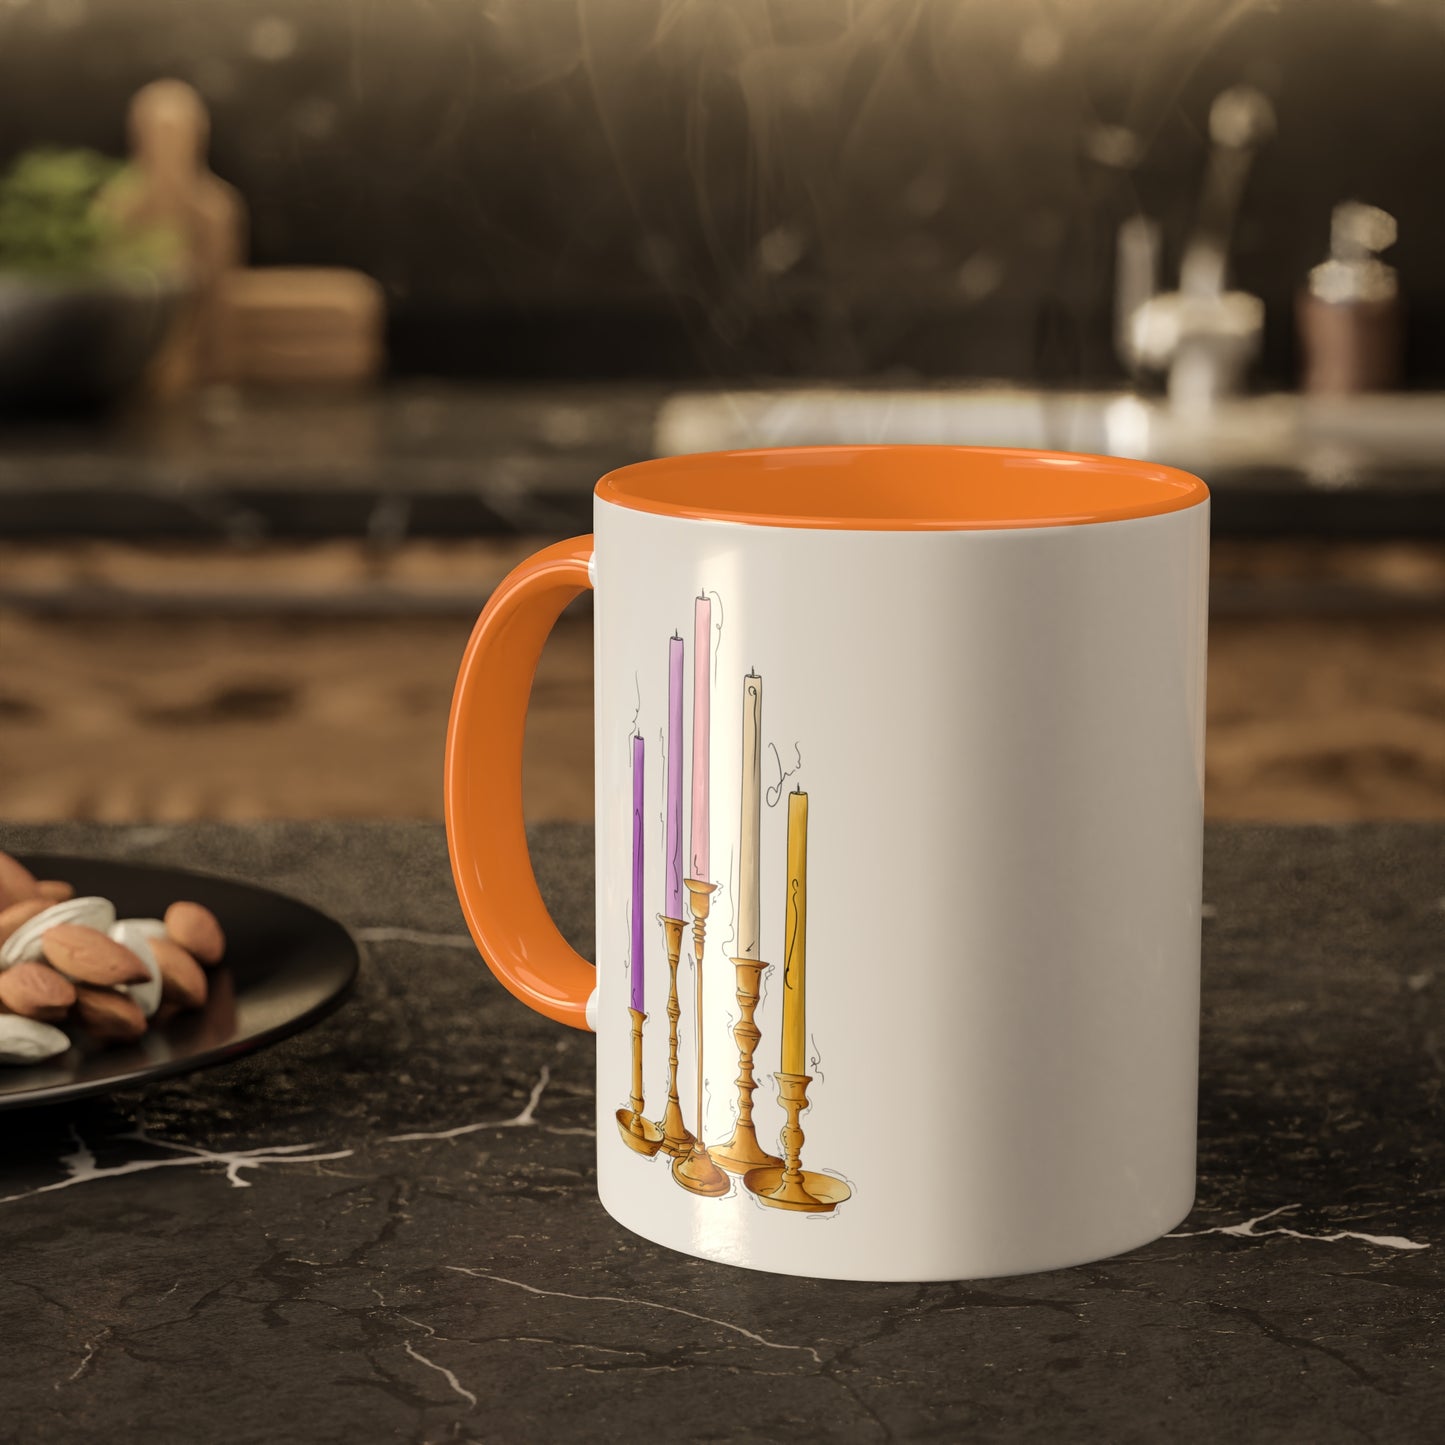 Trixic Pride Flag Candlesticks - Mug